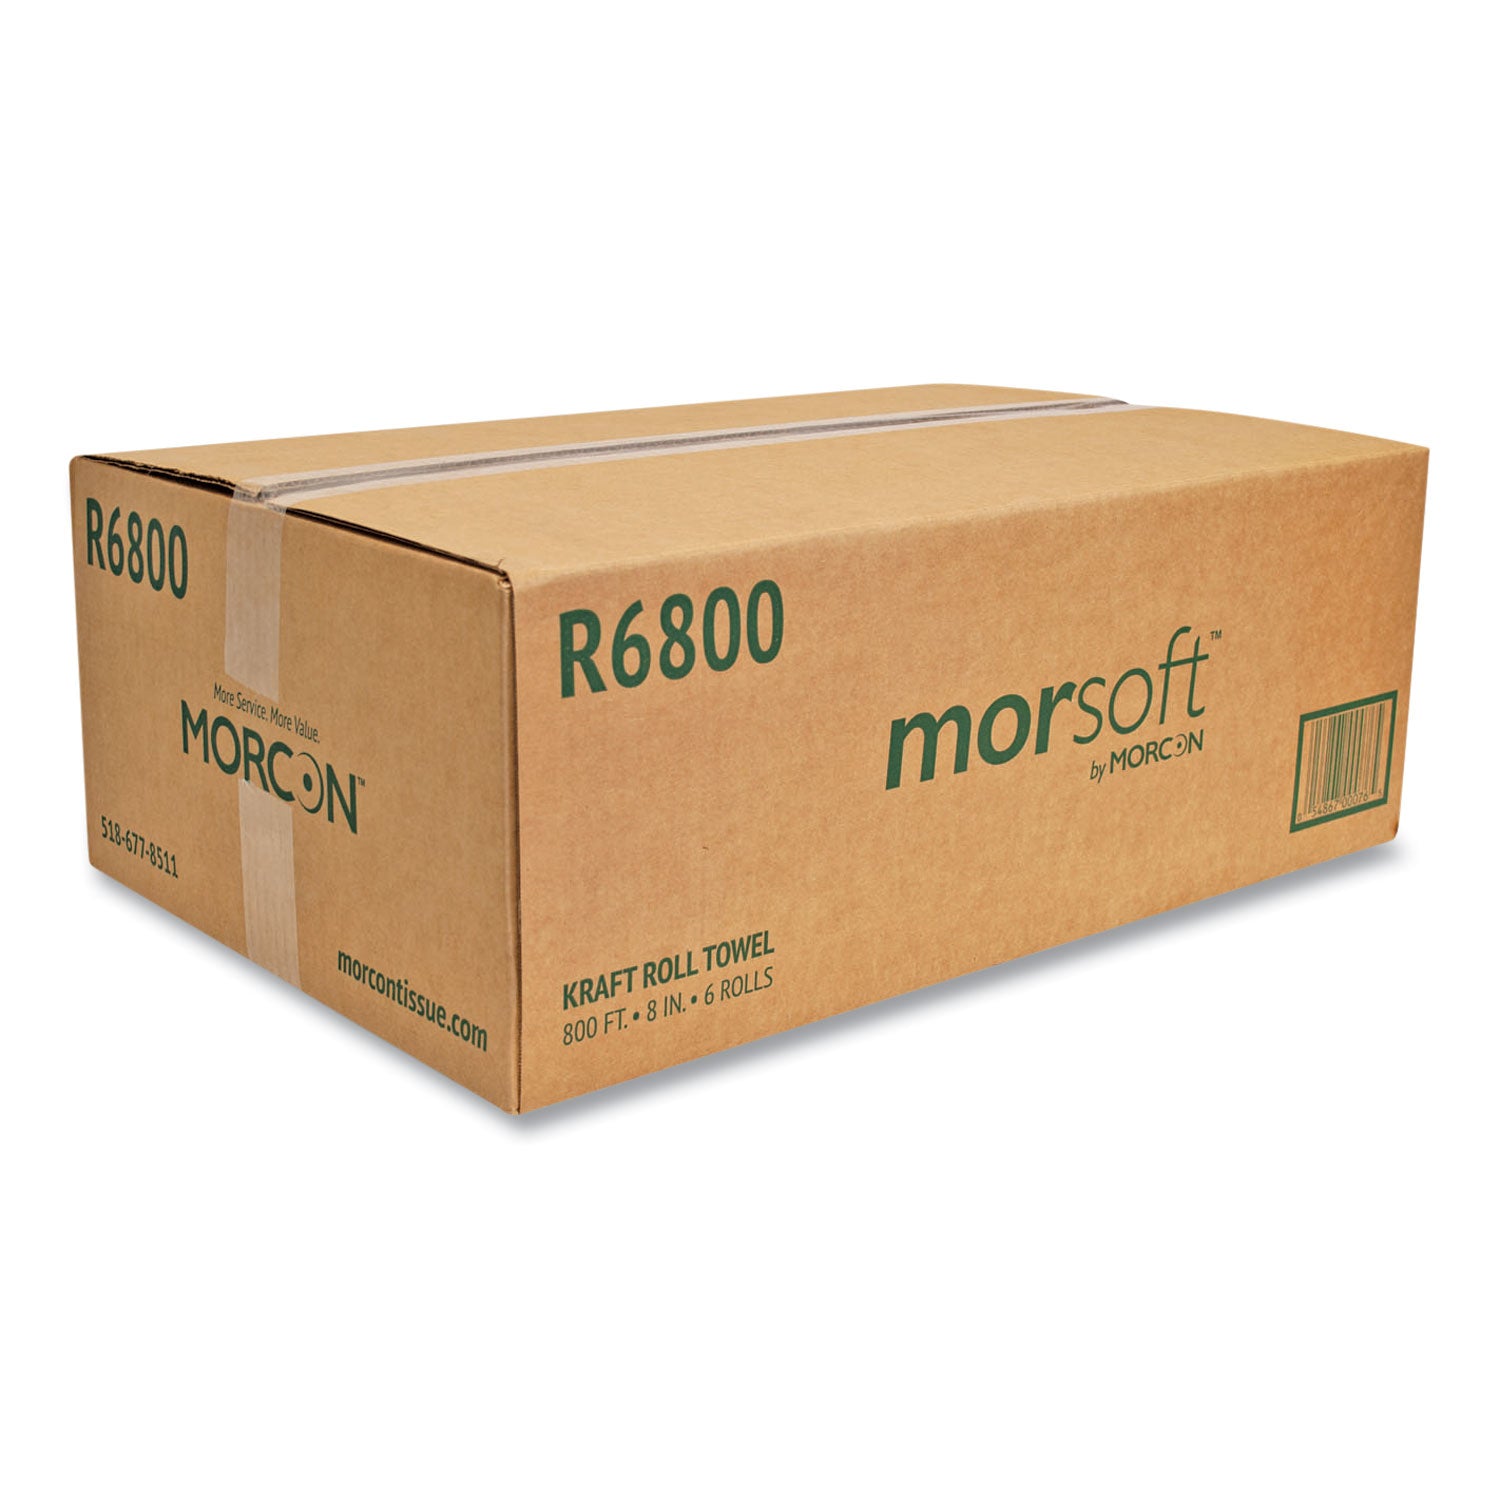 morsoft-universal-roll-towels-1-ply-8-x-800-ft-brown-6-rolls-carton_morr6800 - 2